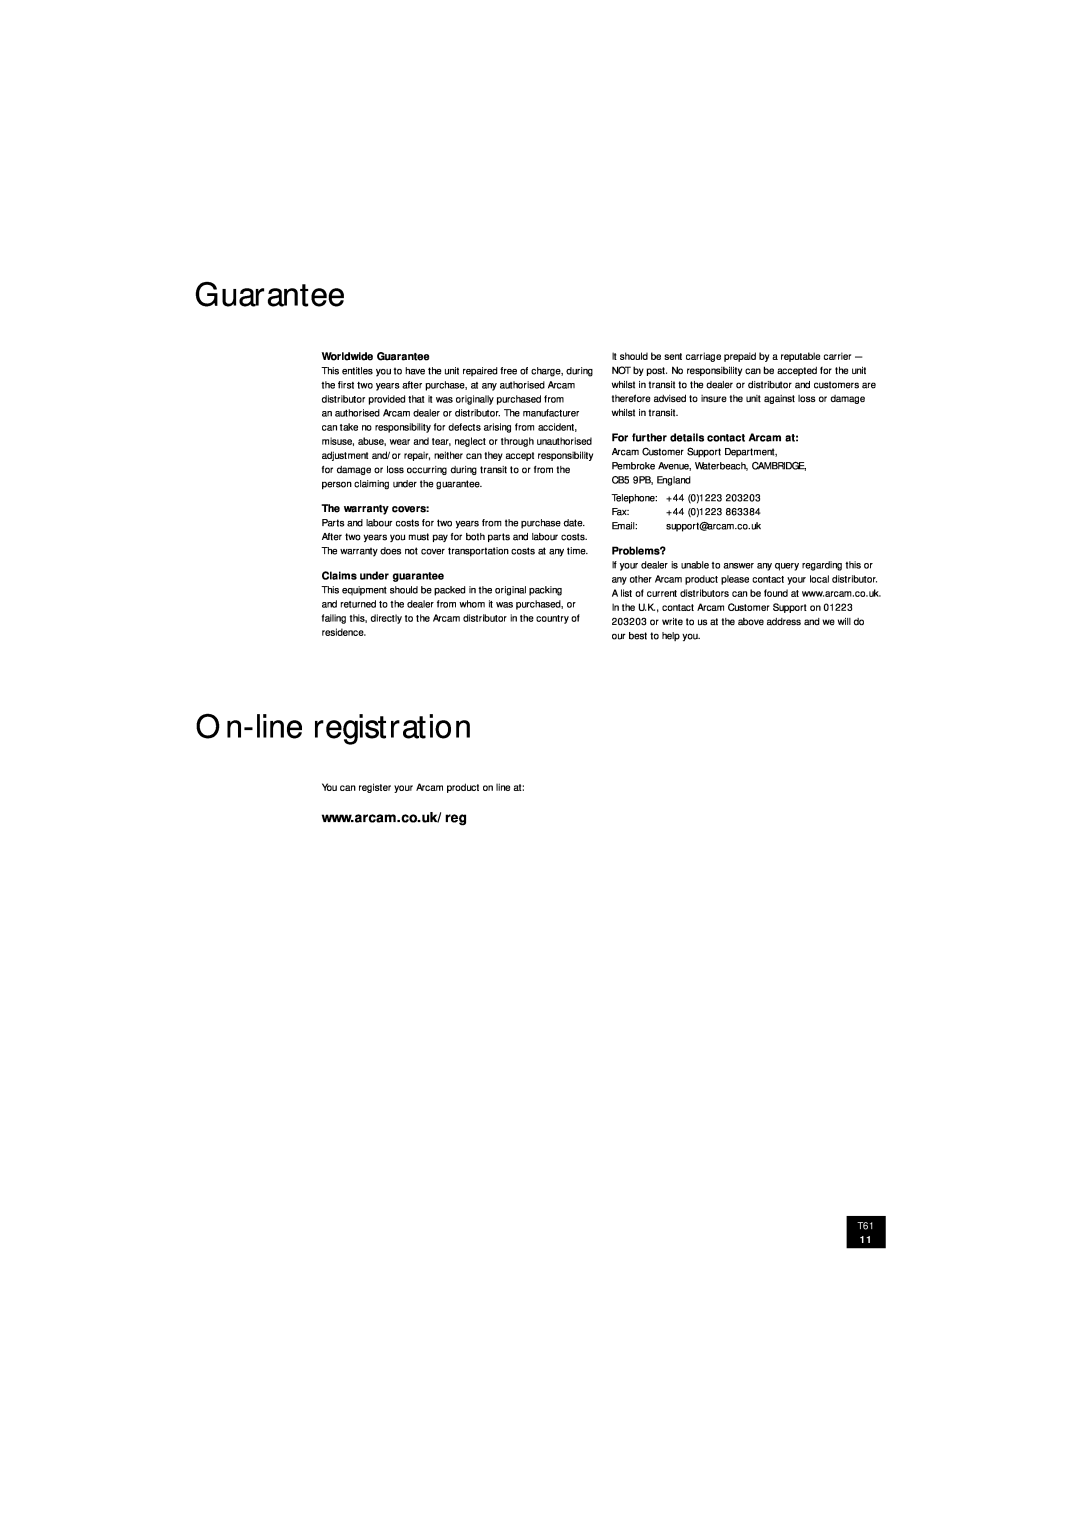 Arcam T61 manual Guarantee, On-lineregistration 